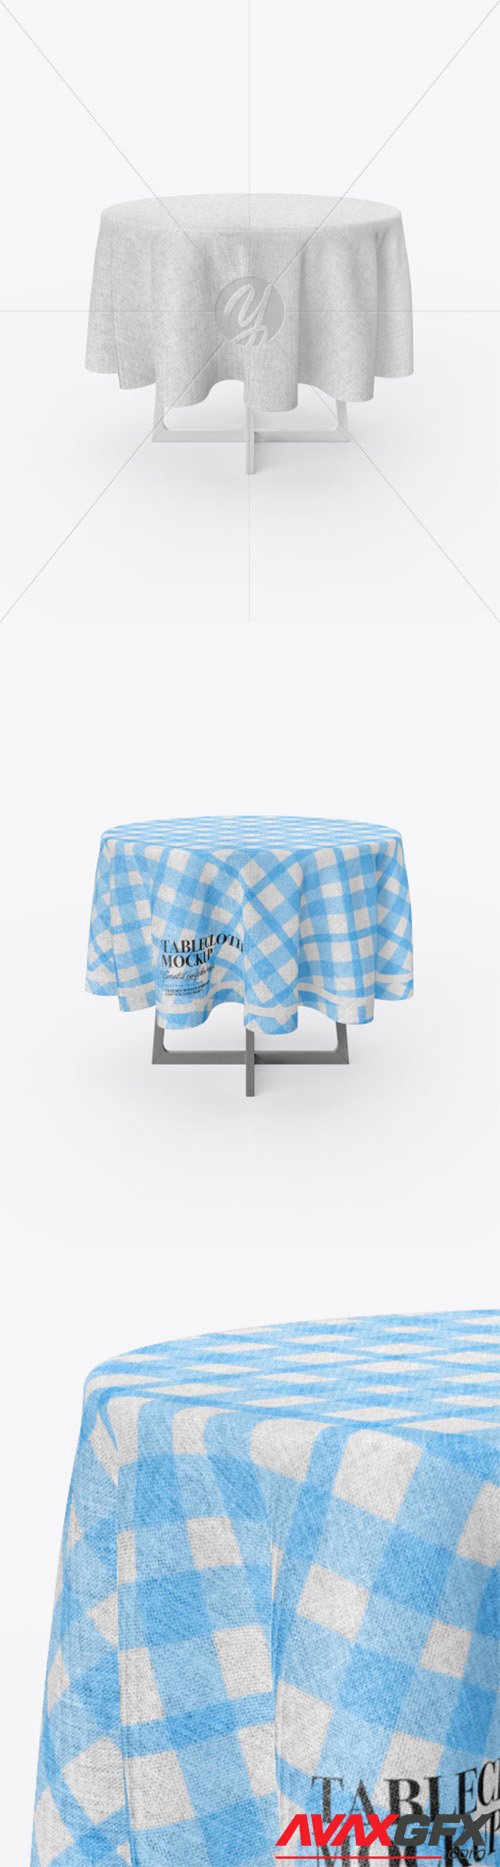 Tablecloth on Table Mockup 56859